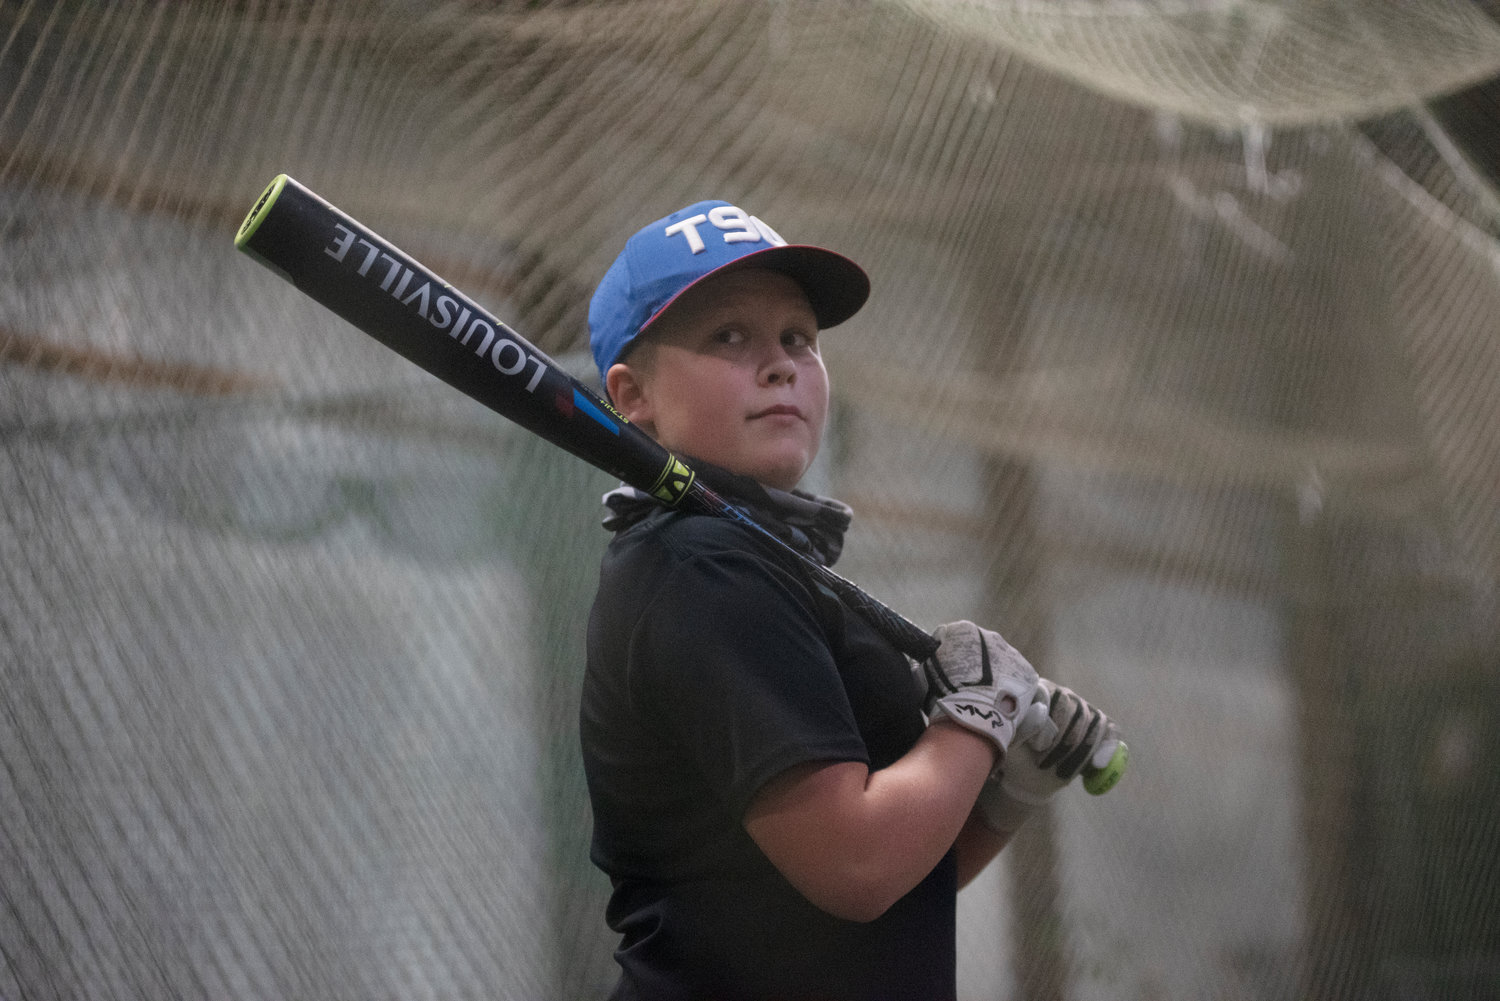 Tenino eighth grader Jaxson Gore prepares to take some swings in the batting cage on Nov. 4.